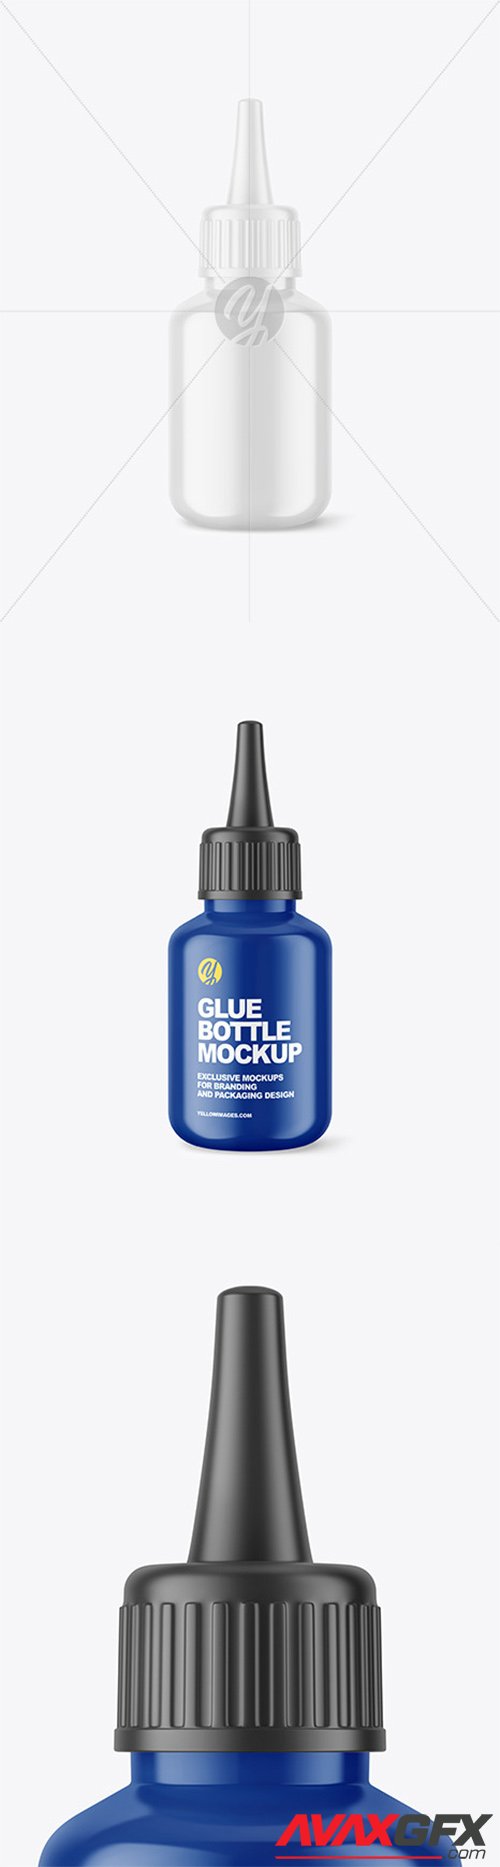 Glossy Glue Bottle Mockup 66588